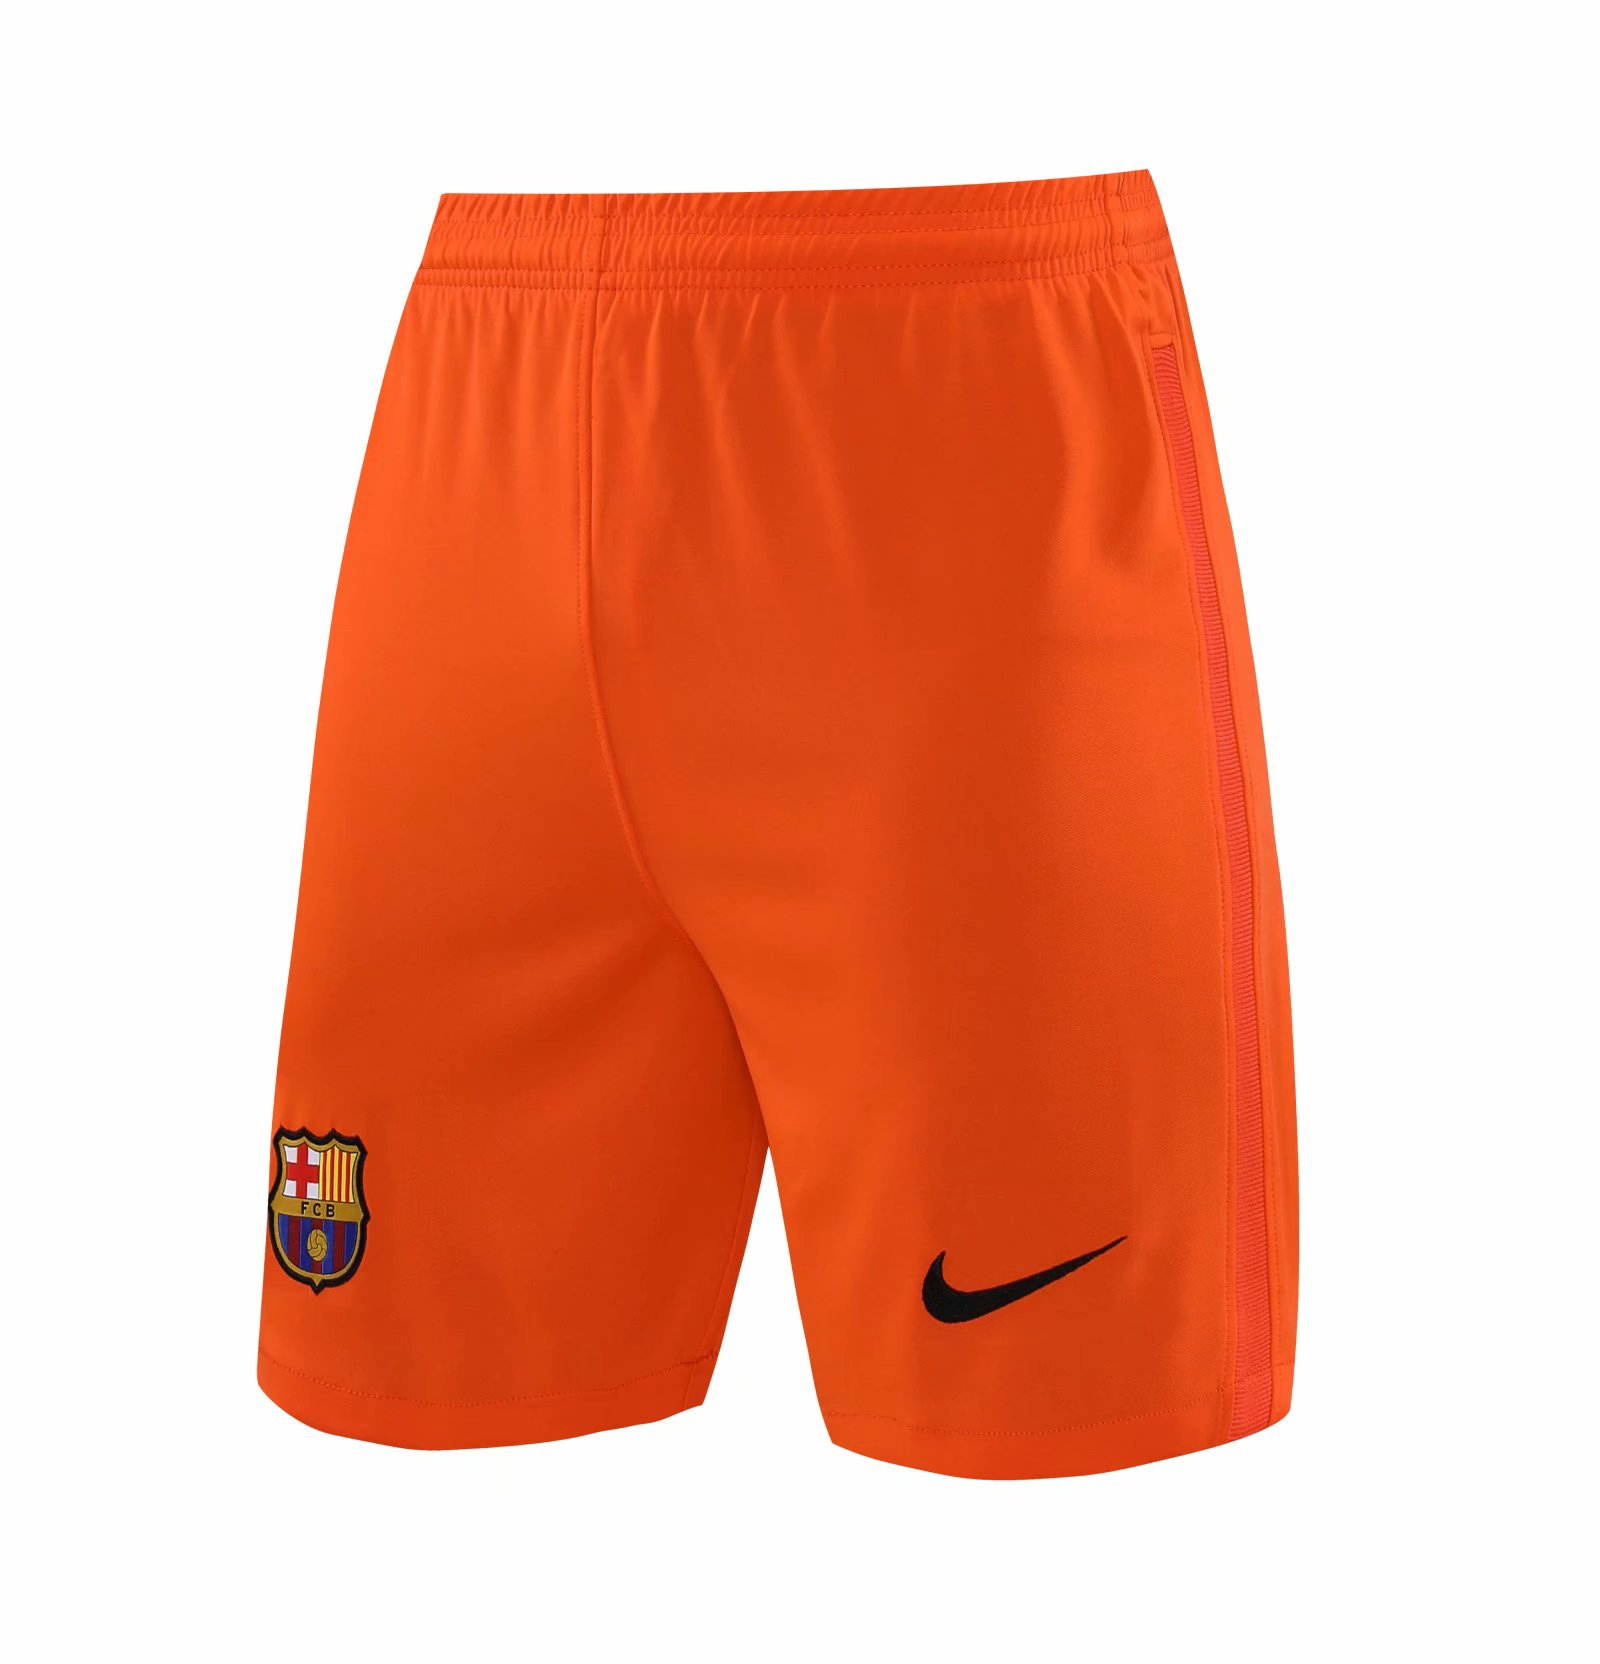 Barcelona Soccer Jersey Goalkeeper Kit(Jersey+Short) Orange Replica 2021/22